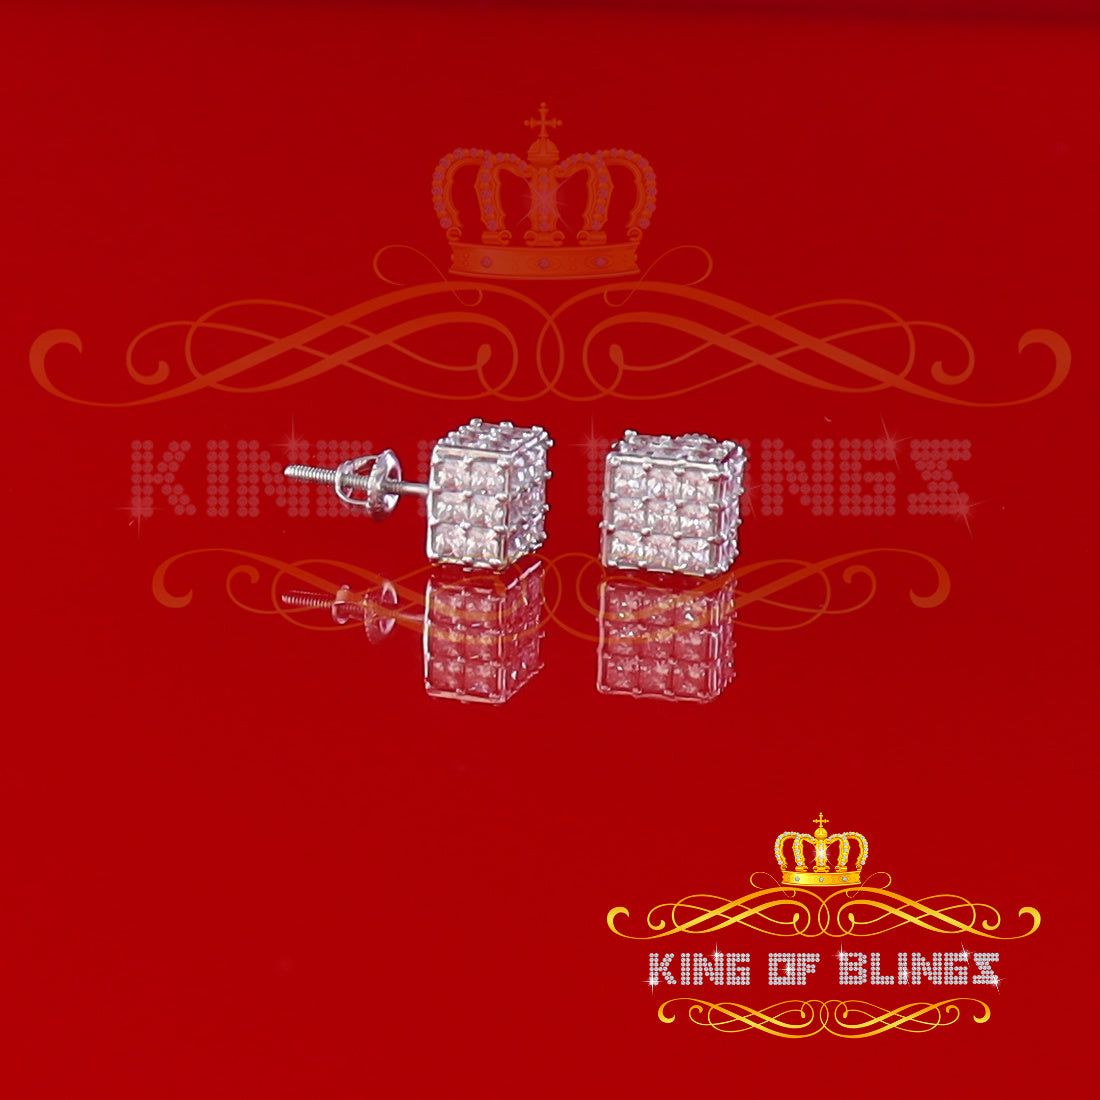 King of Blings- Hip Hop 925 White Silver 5.94ct Cubic Zirconia Women's & Men's Square Earrings KING OF BLINGS